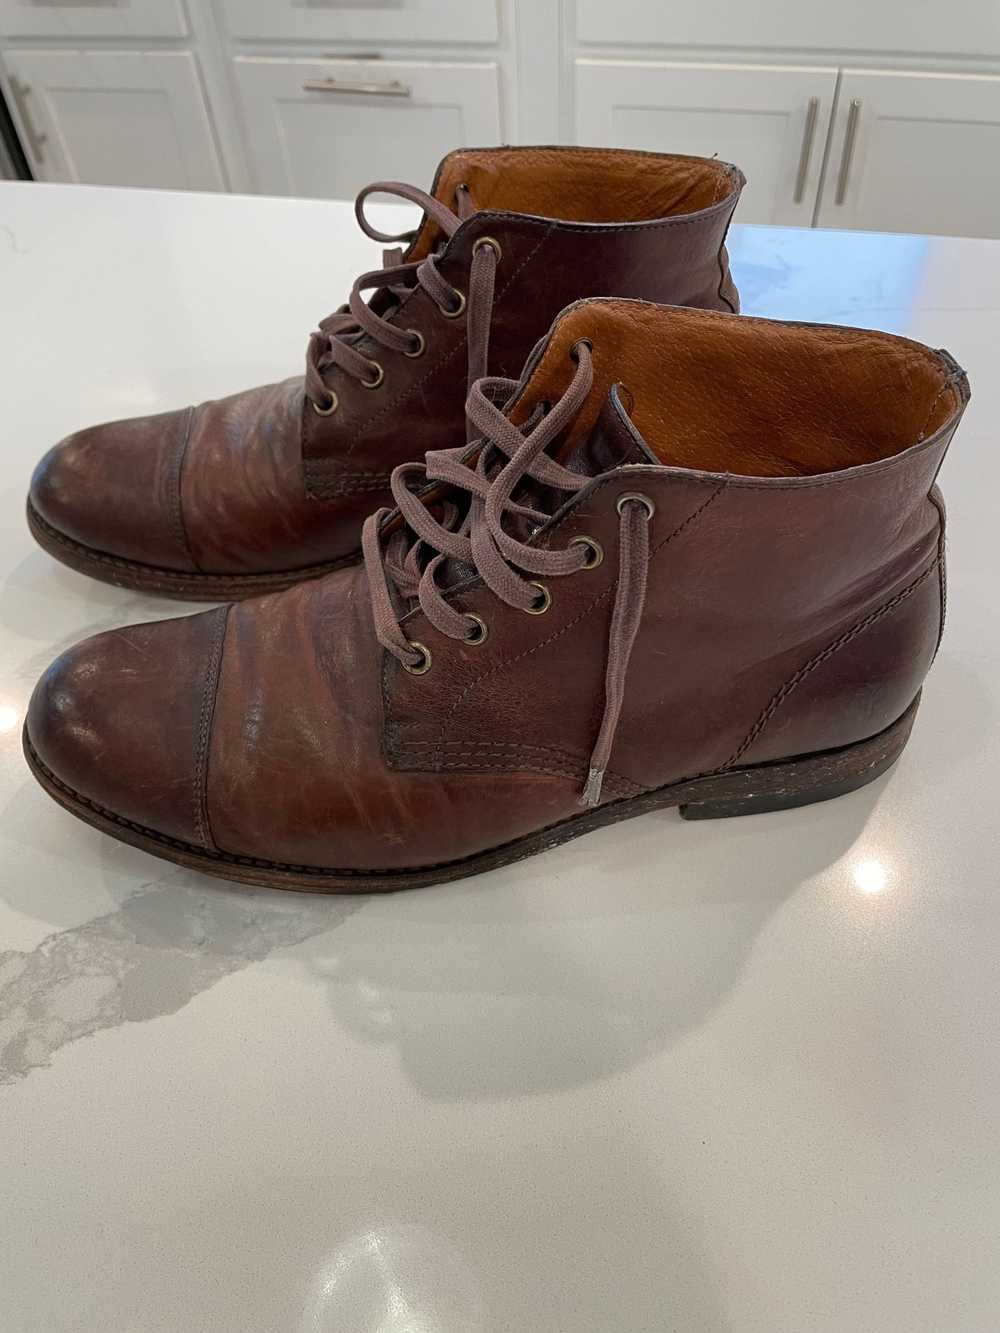 Frye Frye Leather Boots - image 1